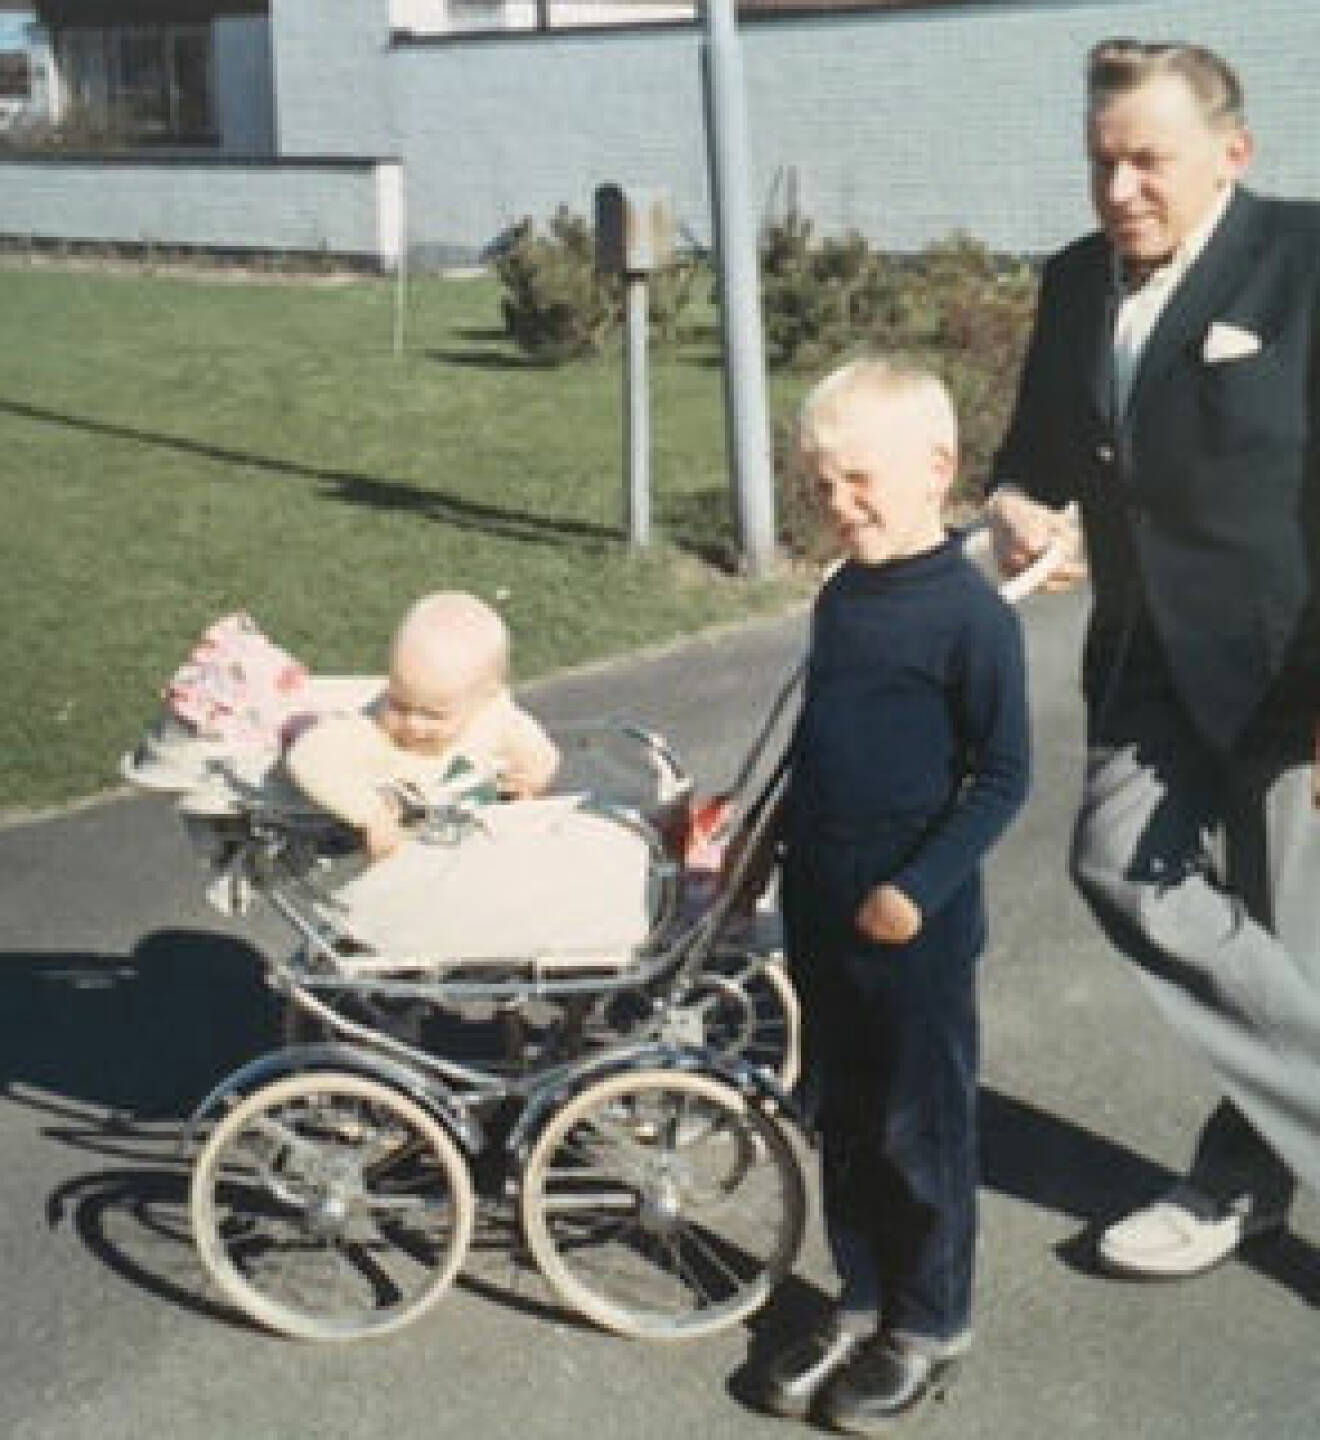 En liten Janne med pappa på barnvagnspromenad.